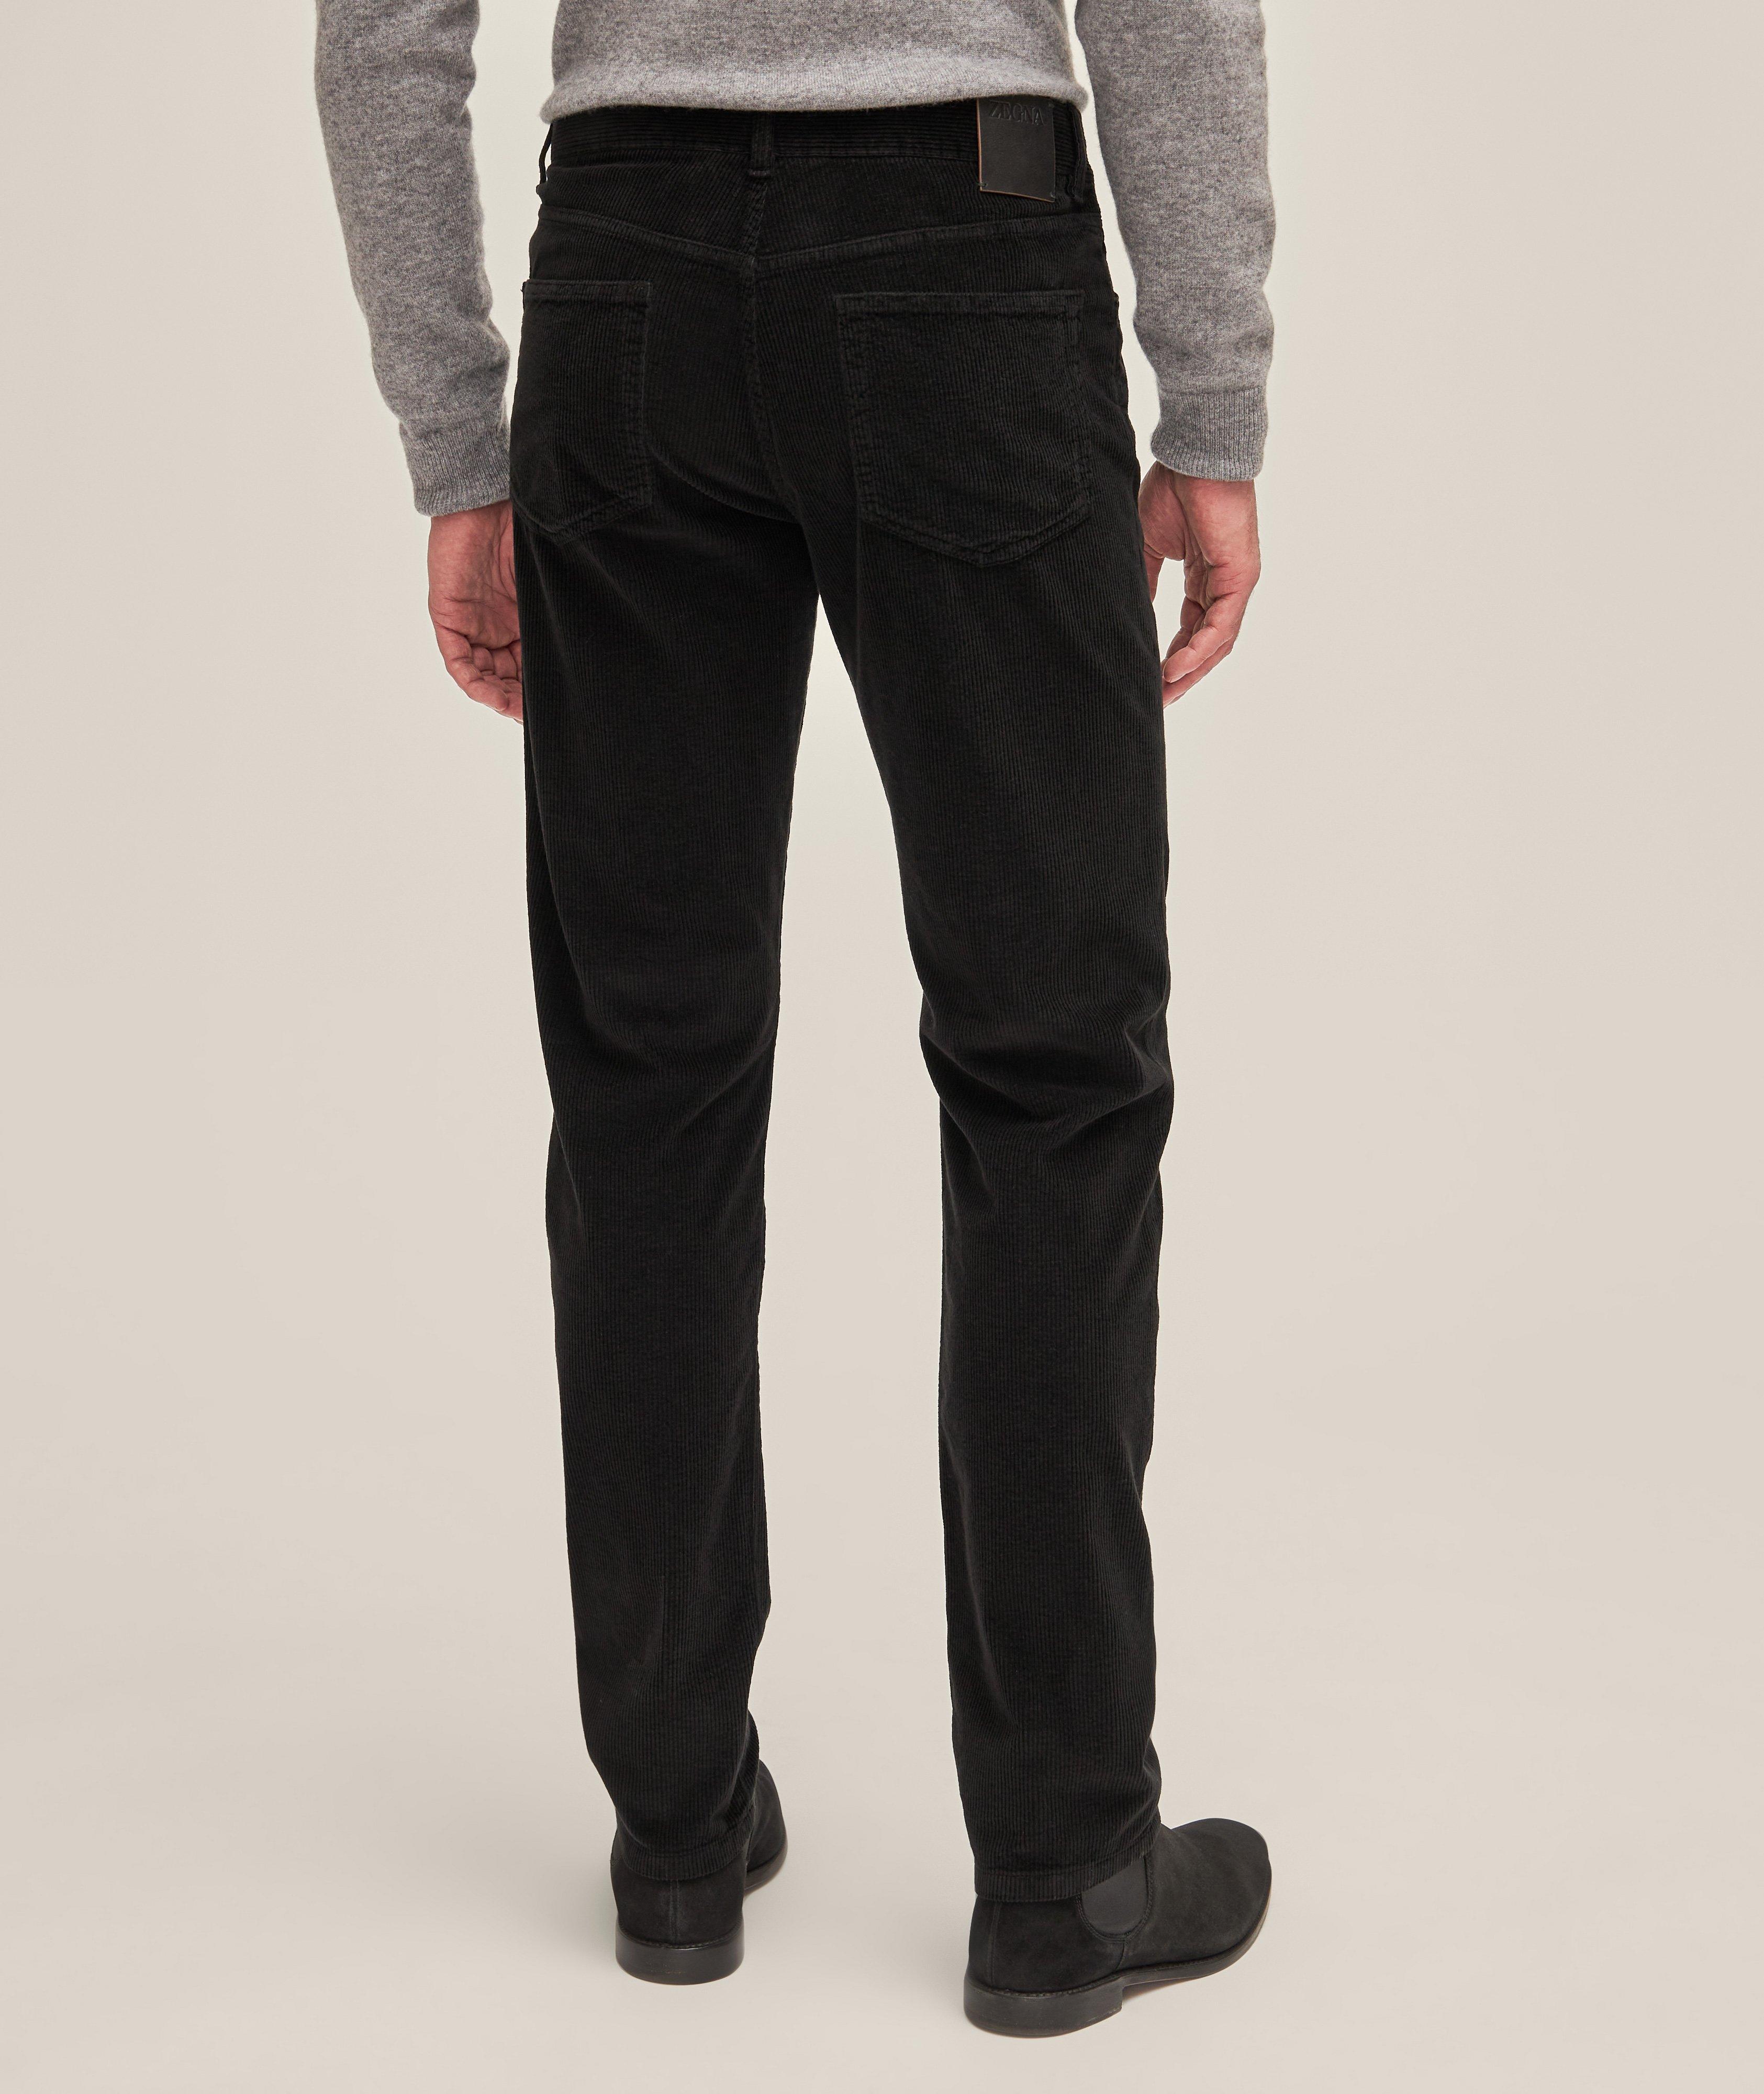 Cashco Five-Pocket Corduroy Pants image 2